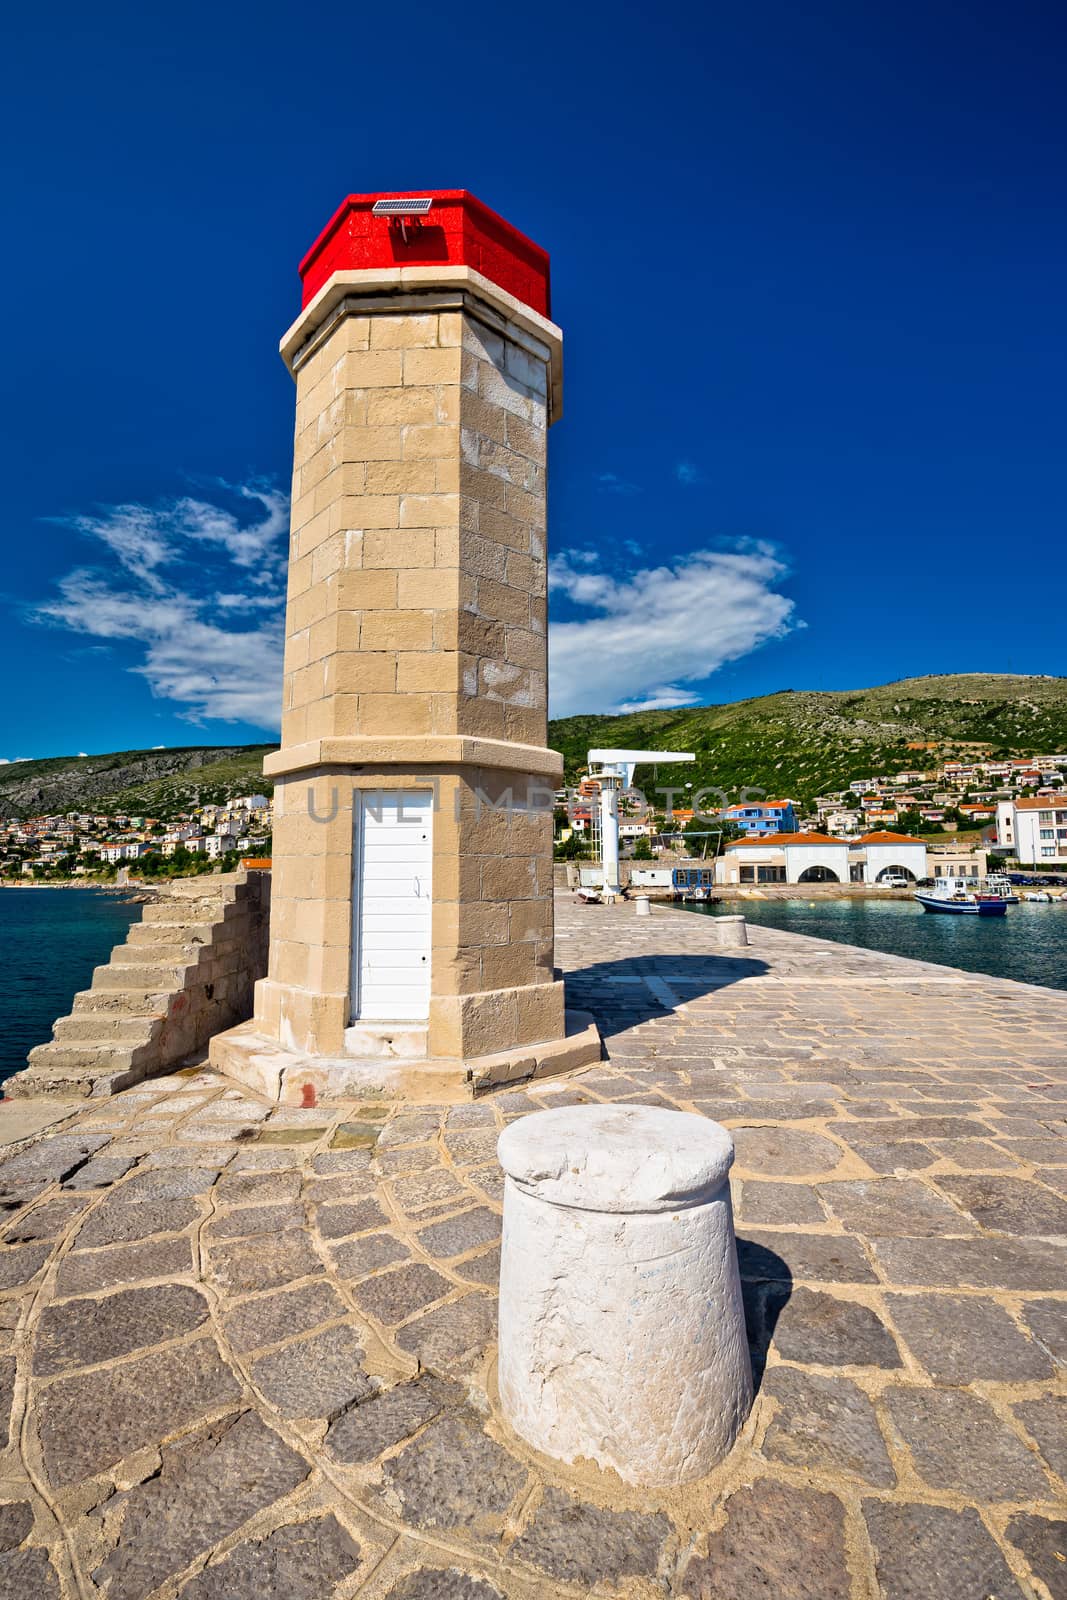 Lighthouse in Adriatic town of Senj, Primorje region of Croatia